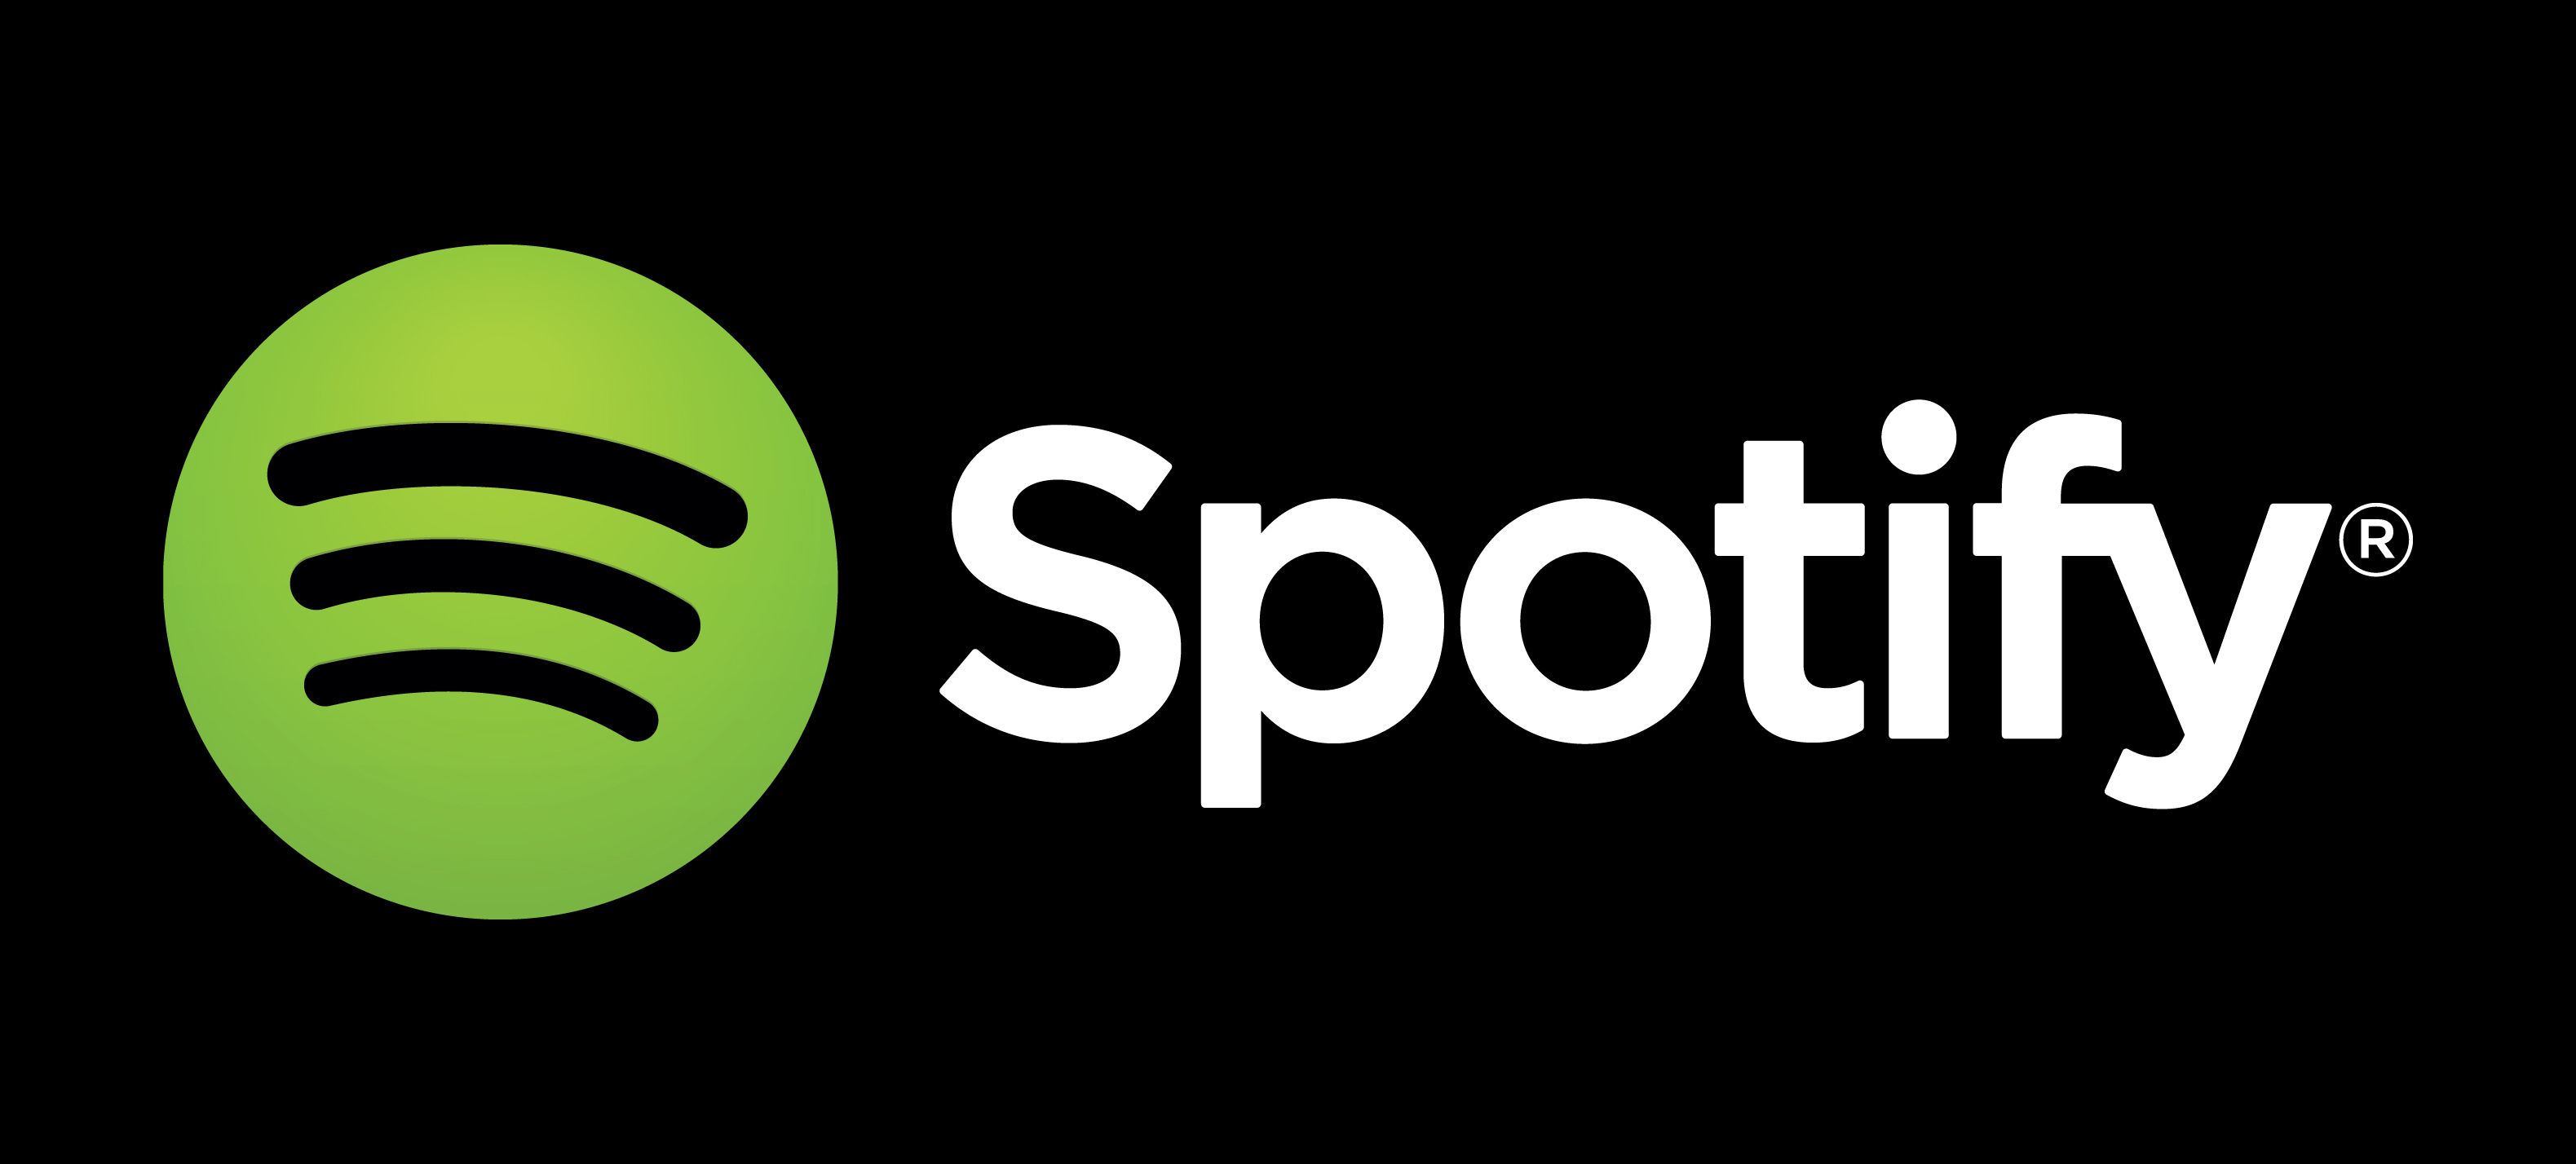 Spotify_logo_horizontal_black.jpg